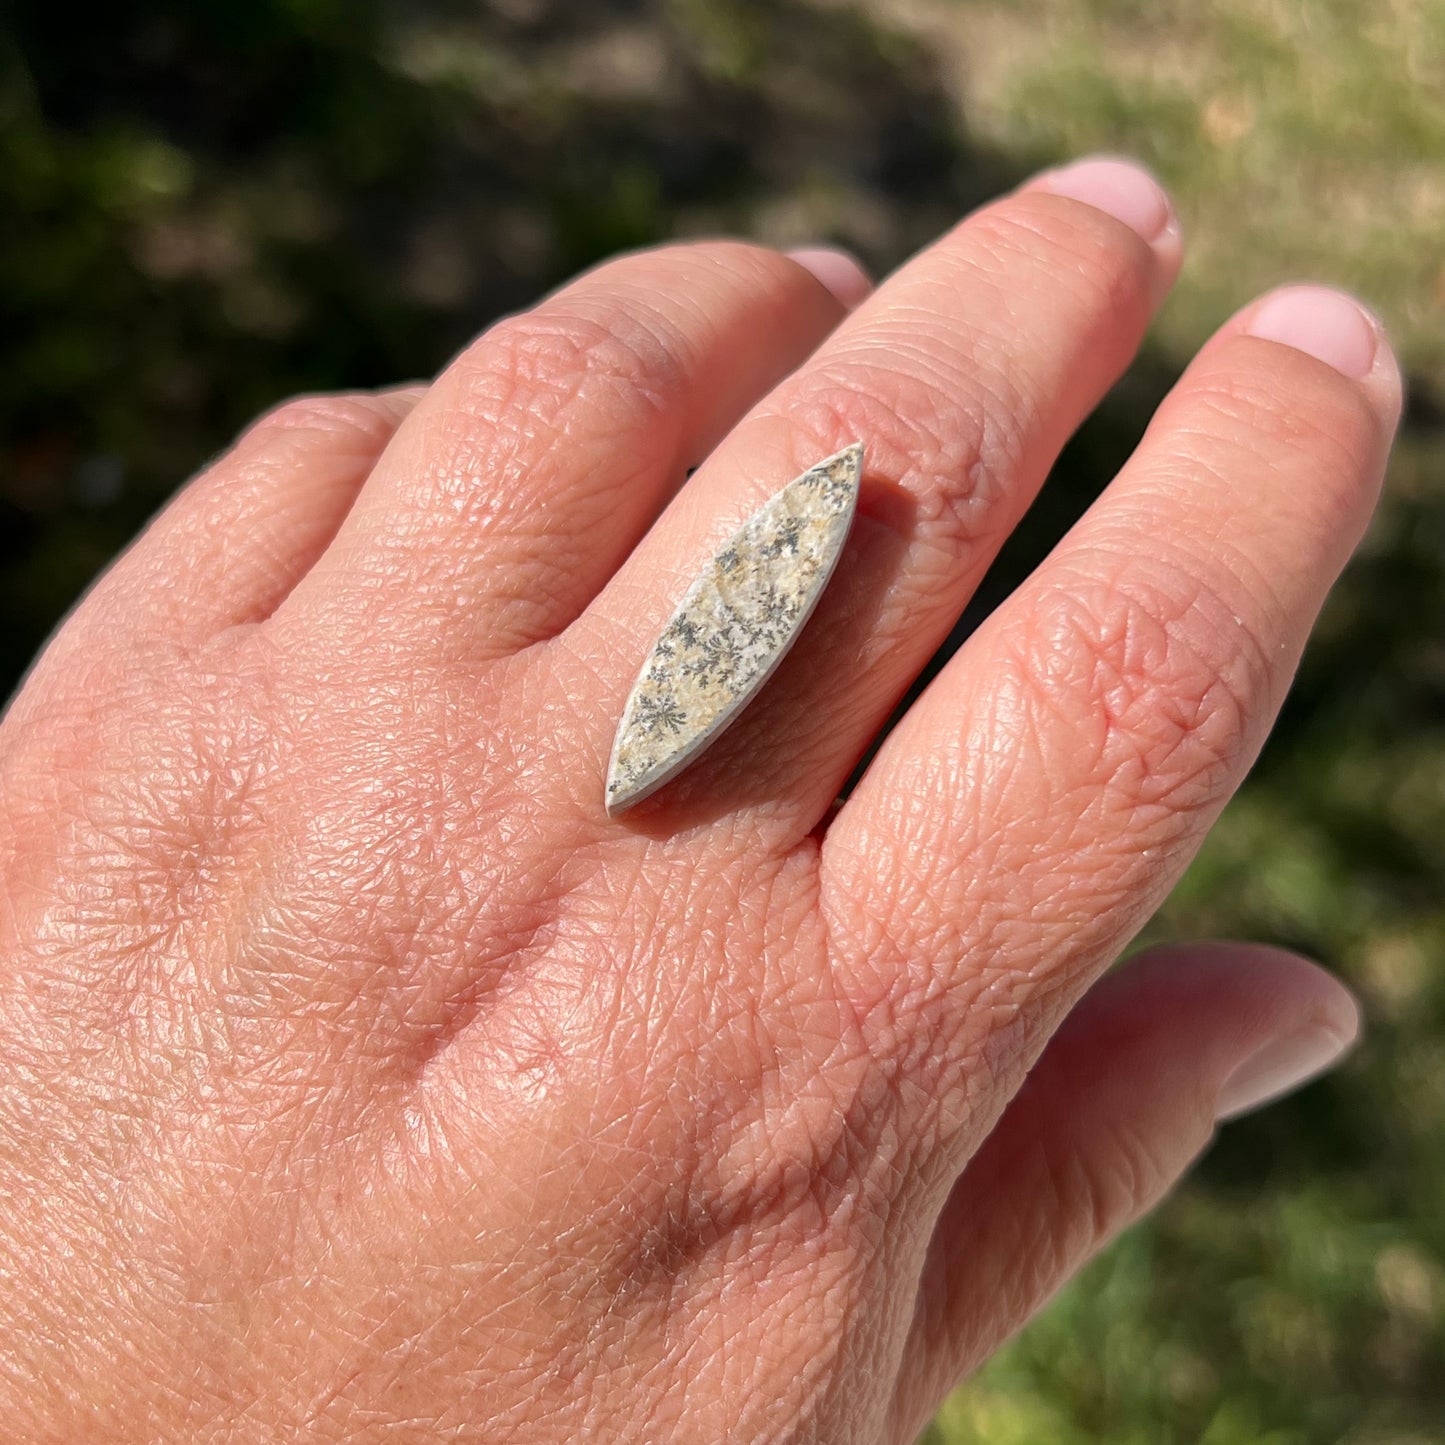 Dendritic Limestone, 8.30 cts